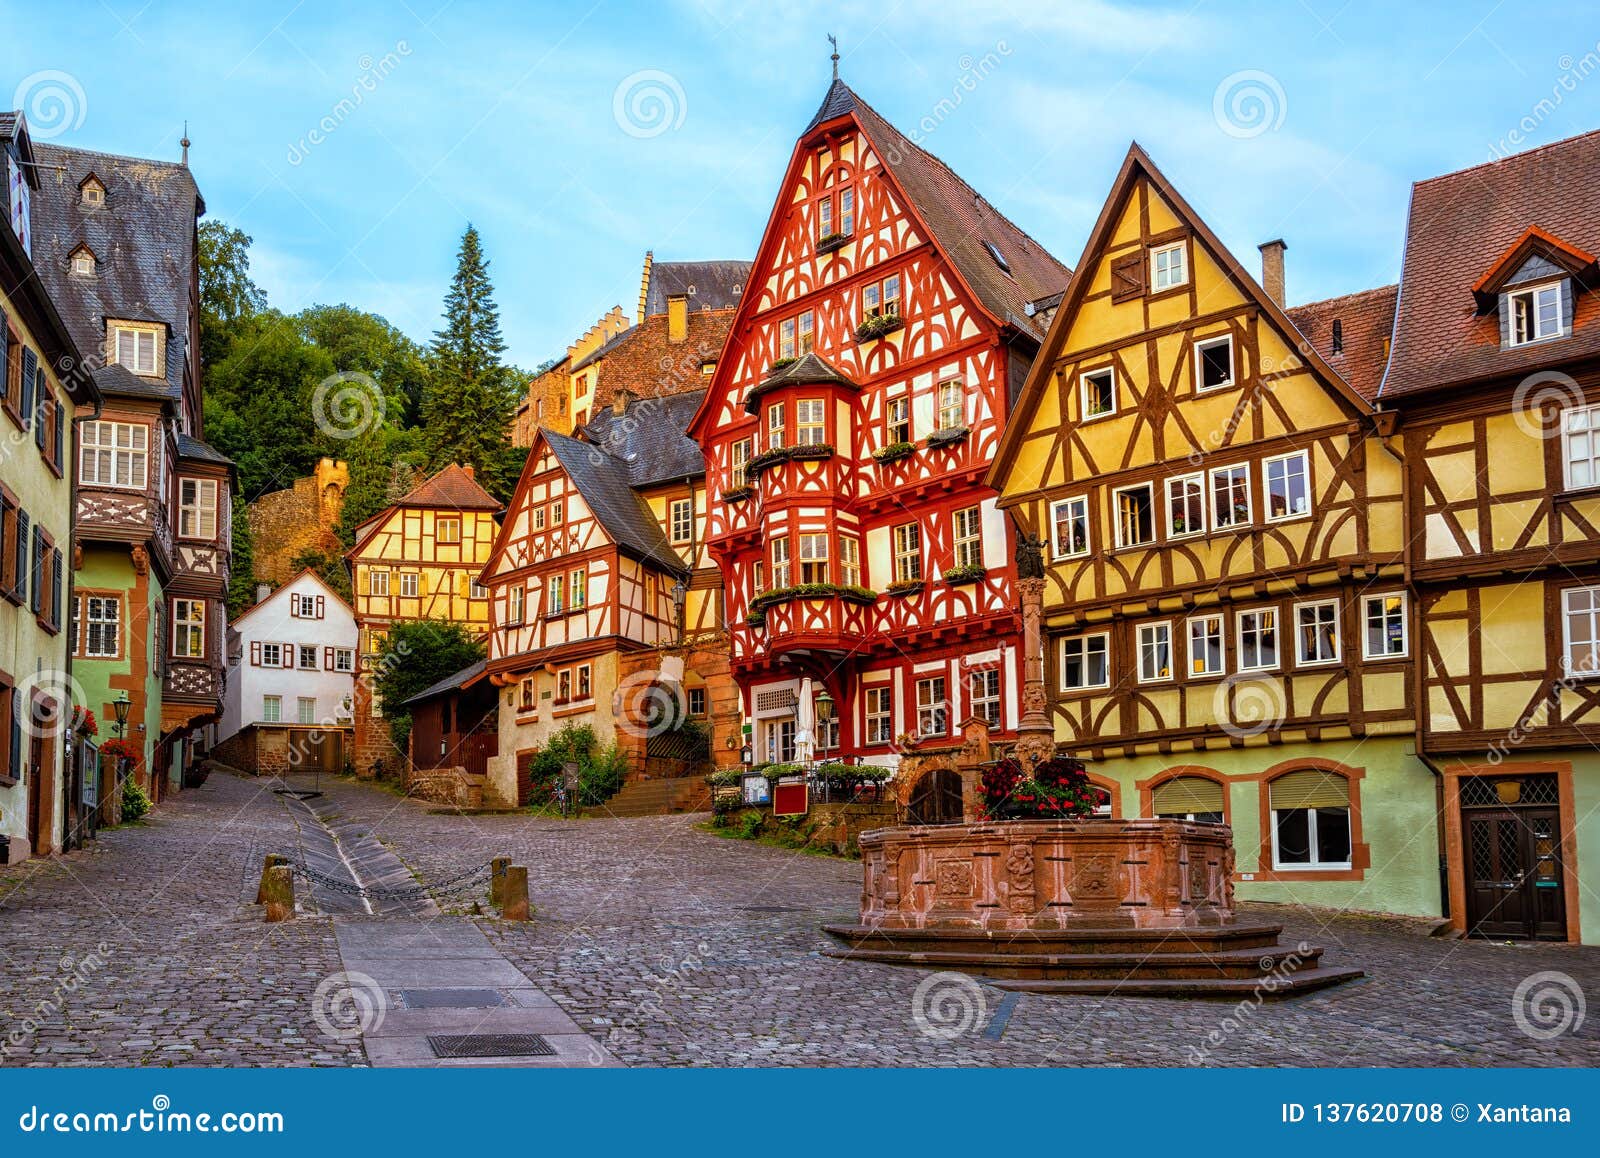 miltenberg medieval old town, bavaria, germany